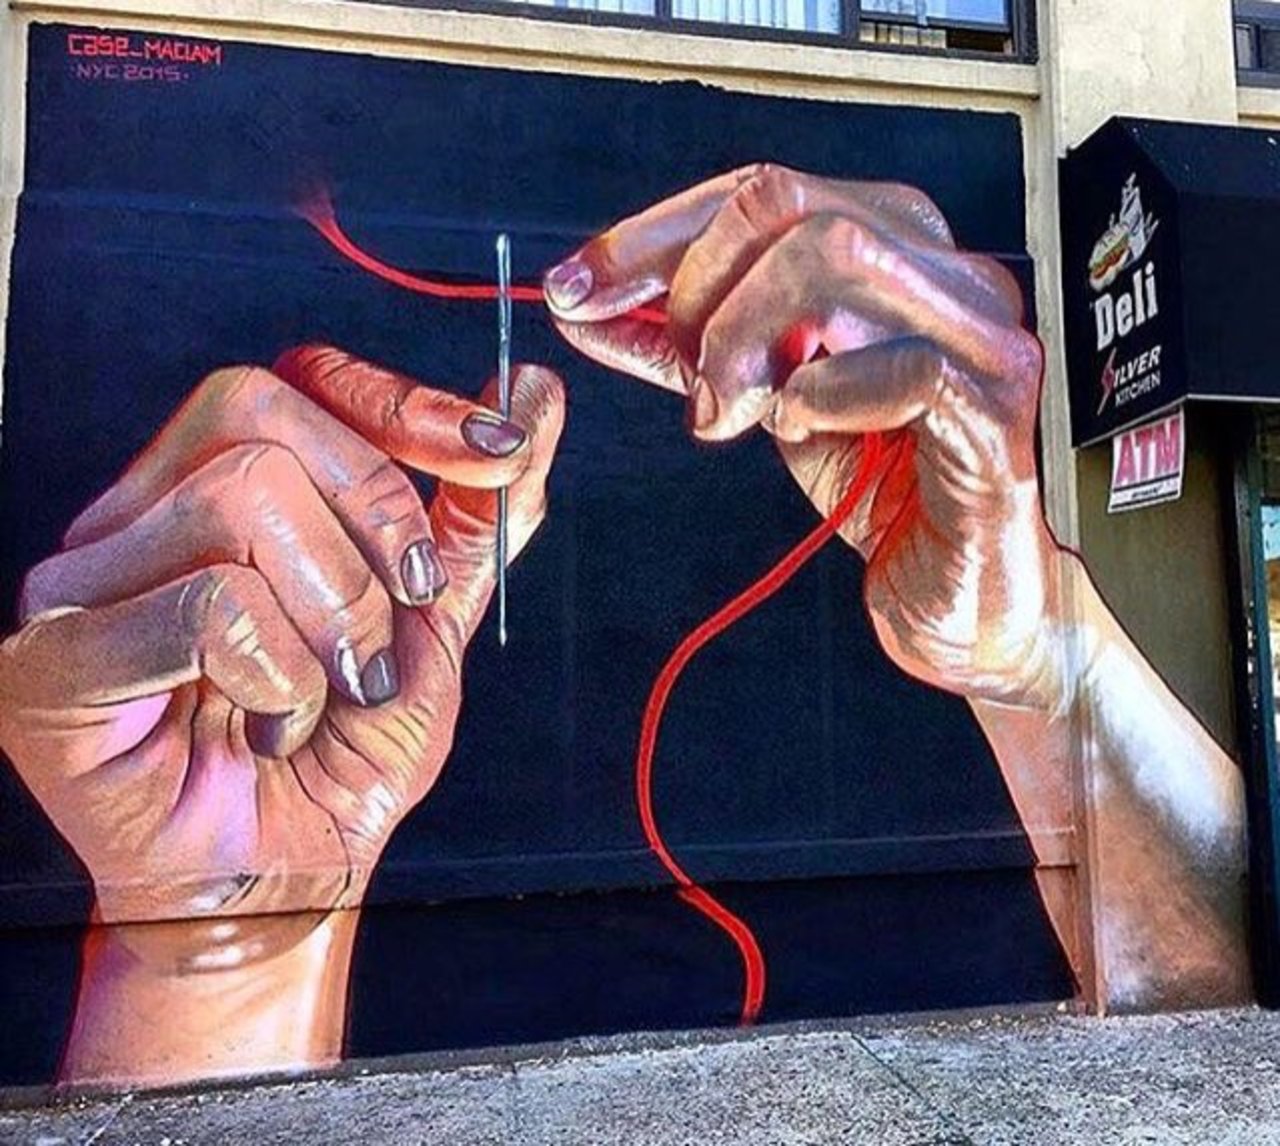 New Street Art by Case Ma'Claim in NYC 

#art #graffiti #mural #streetart https://t.co/ppFpJfDjJg